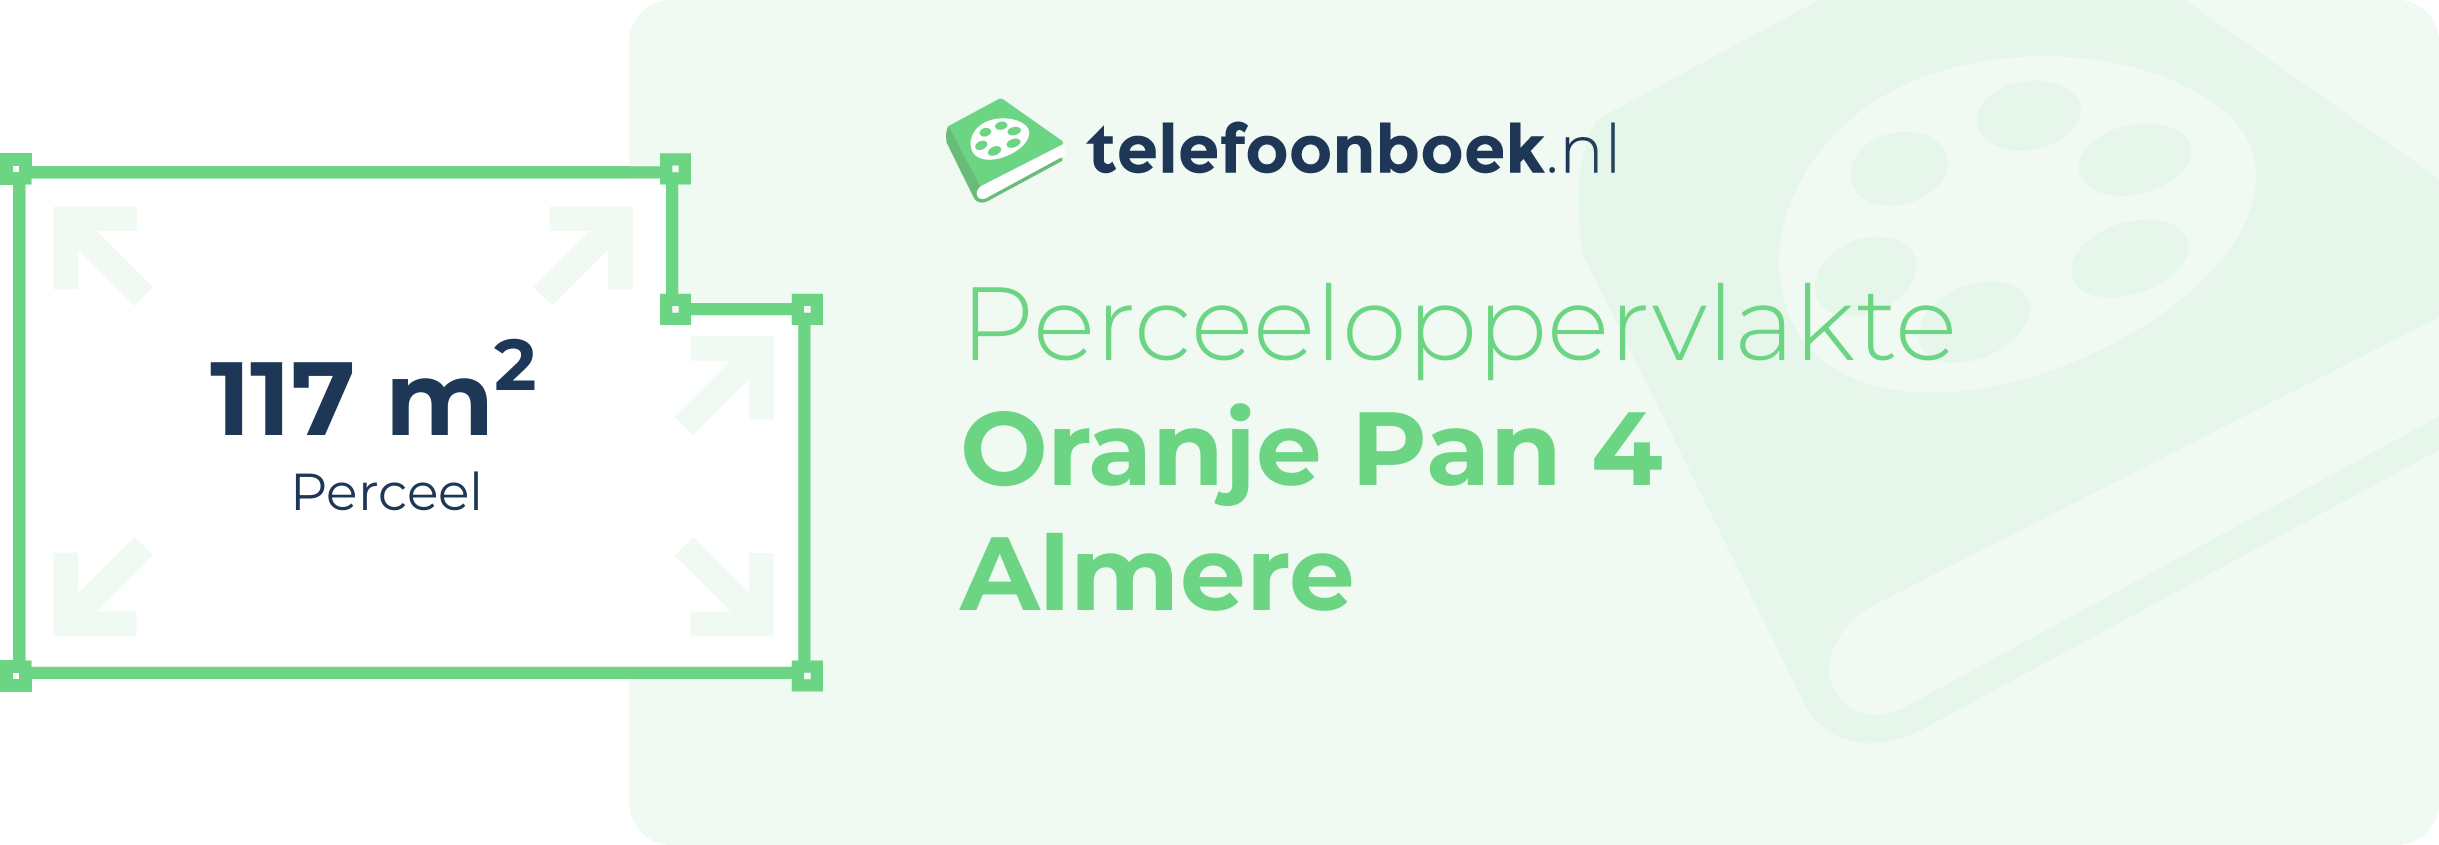 Perceeloppervlakte Oranje Pan 4 Almere